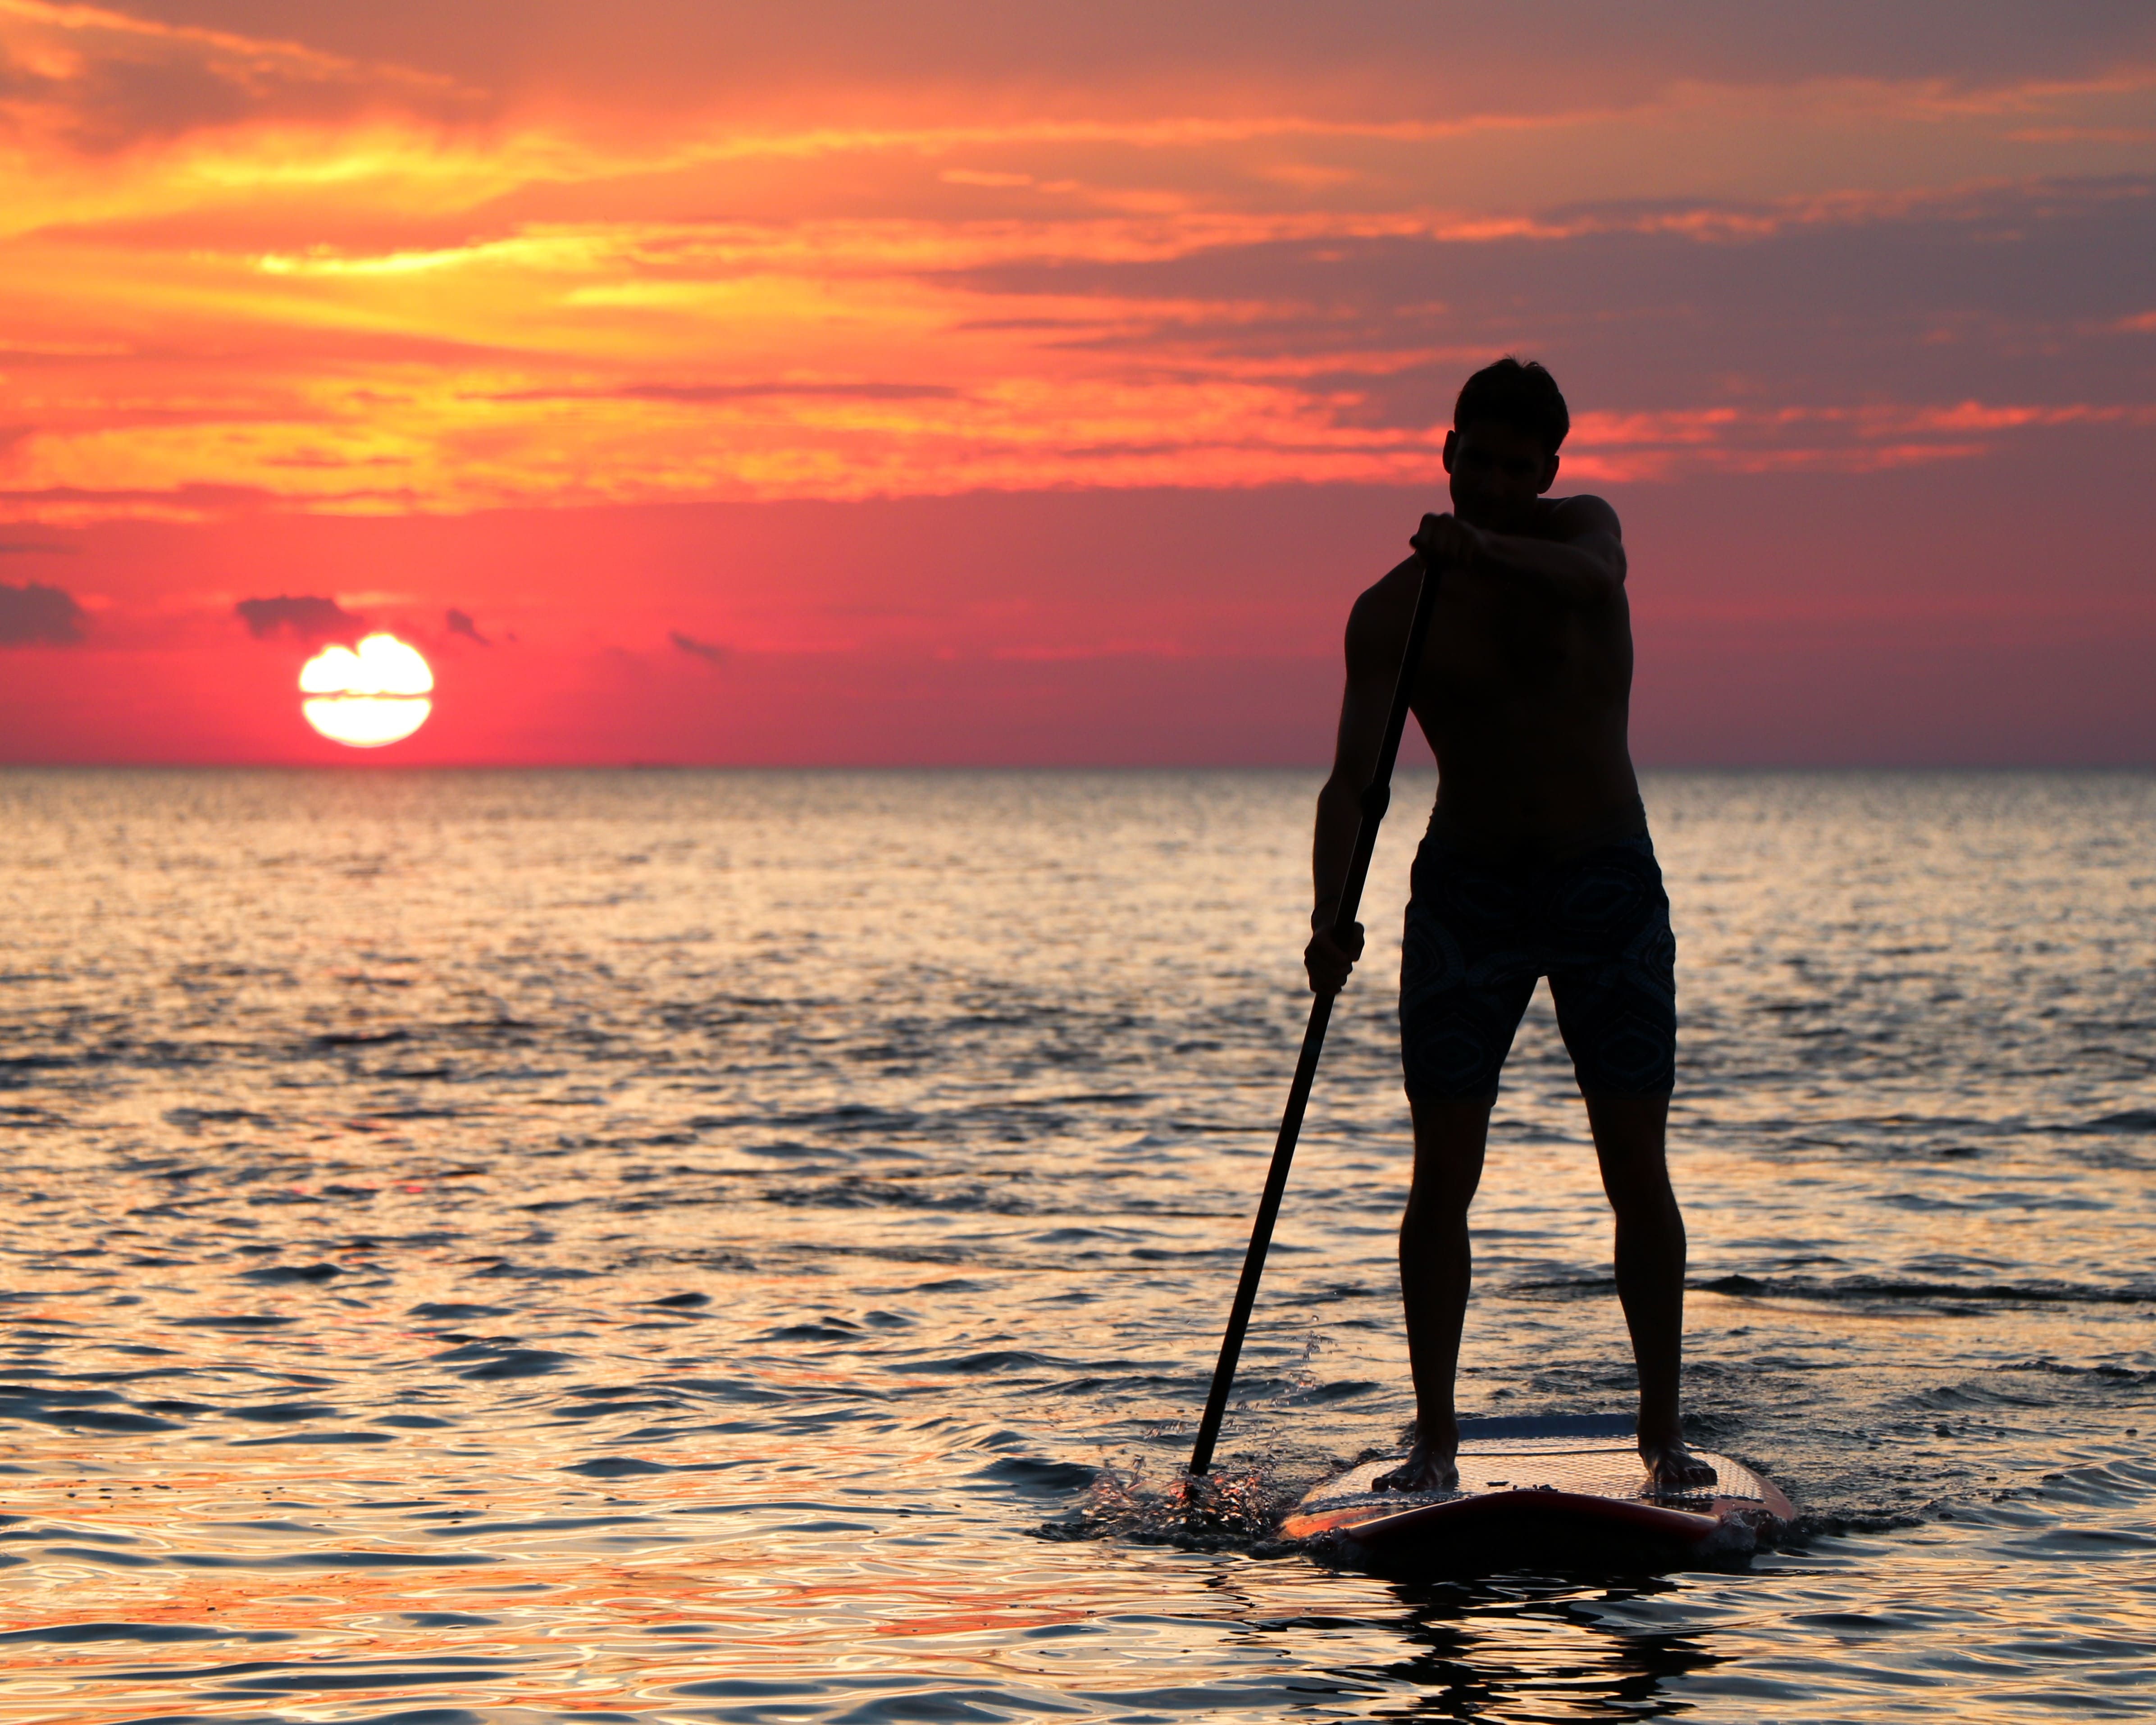 Tamarindo sunset tours - stand-up paddle boarding